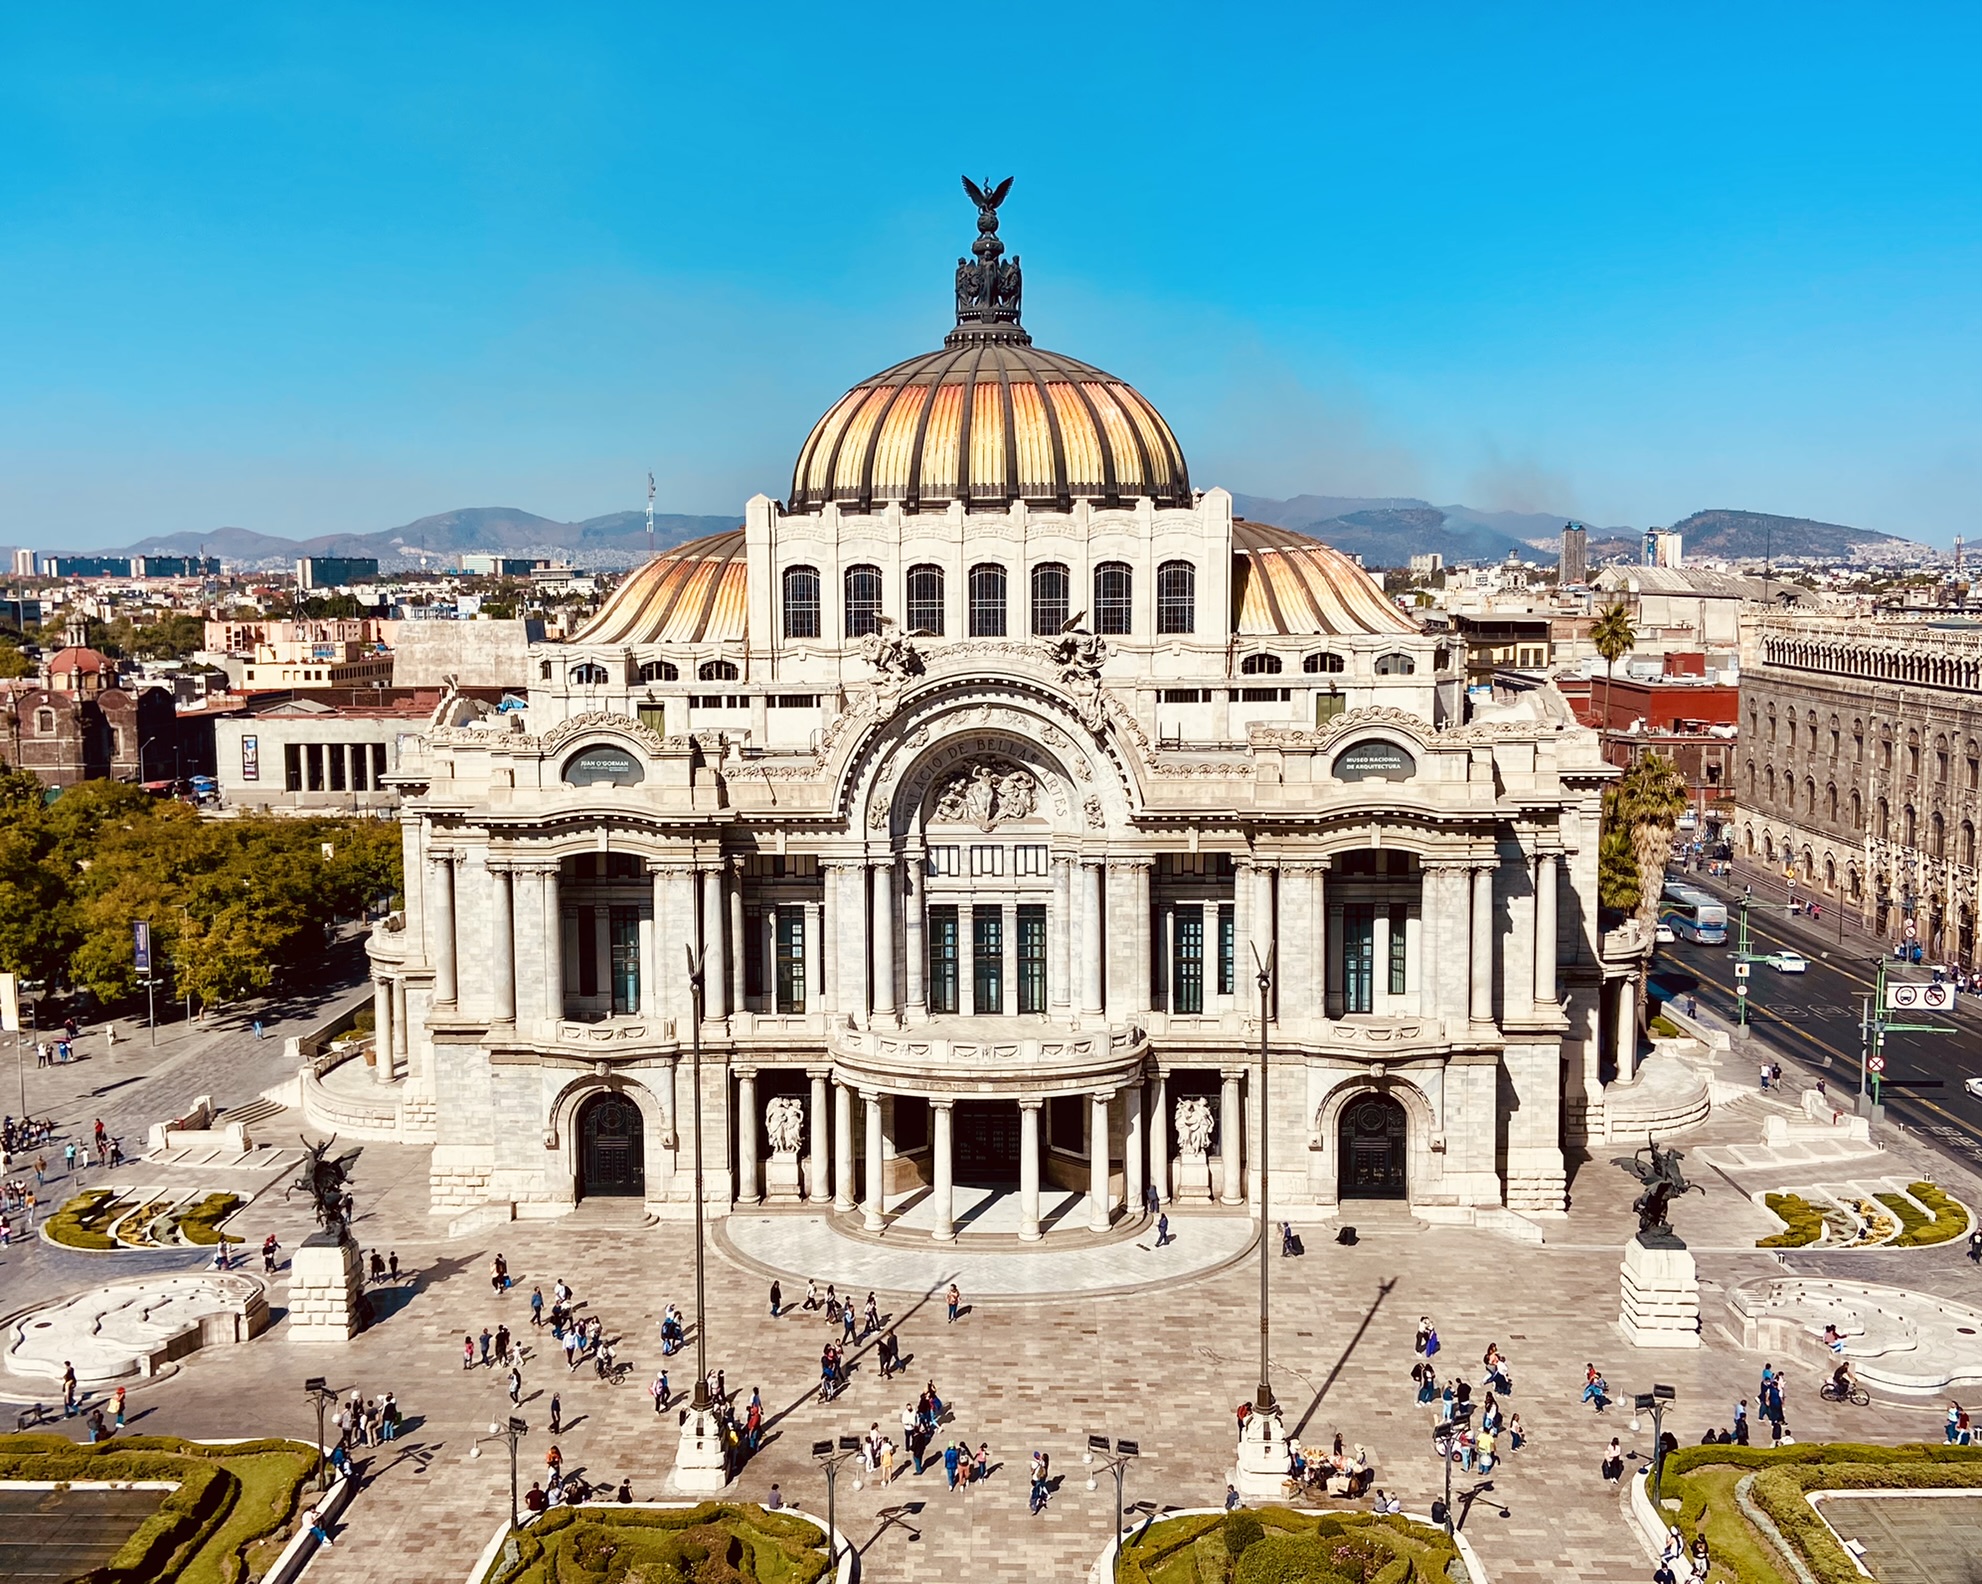 Mexico City Landmark